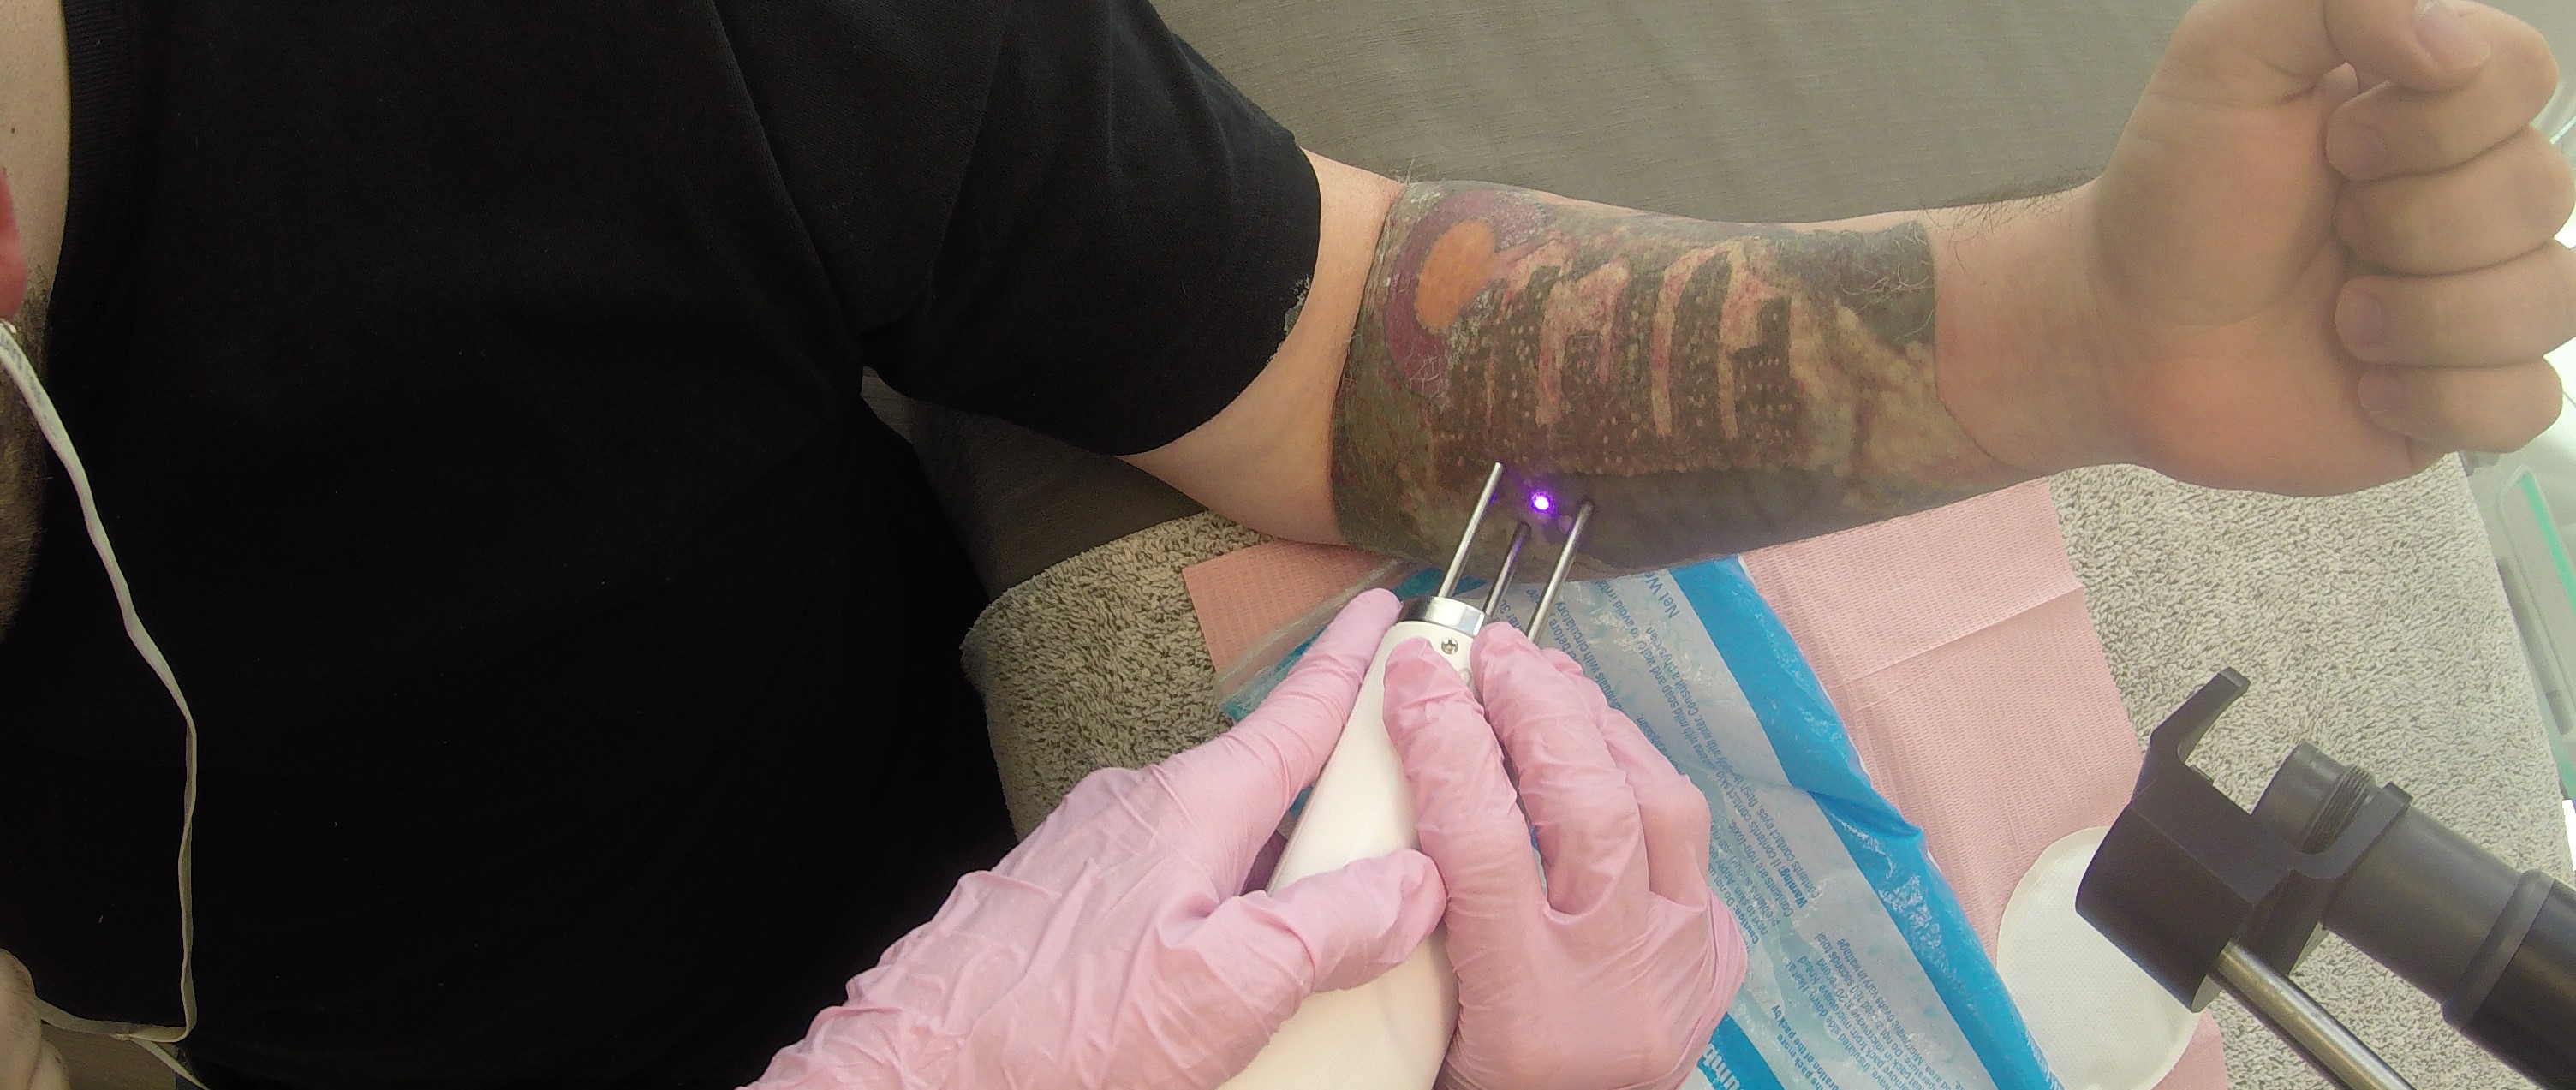 Hepatitis C linked to tattoo ink | Fox News